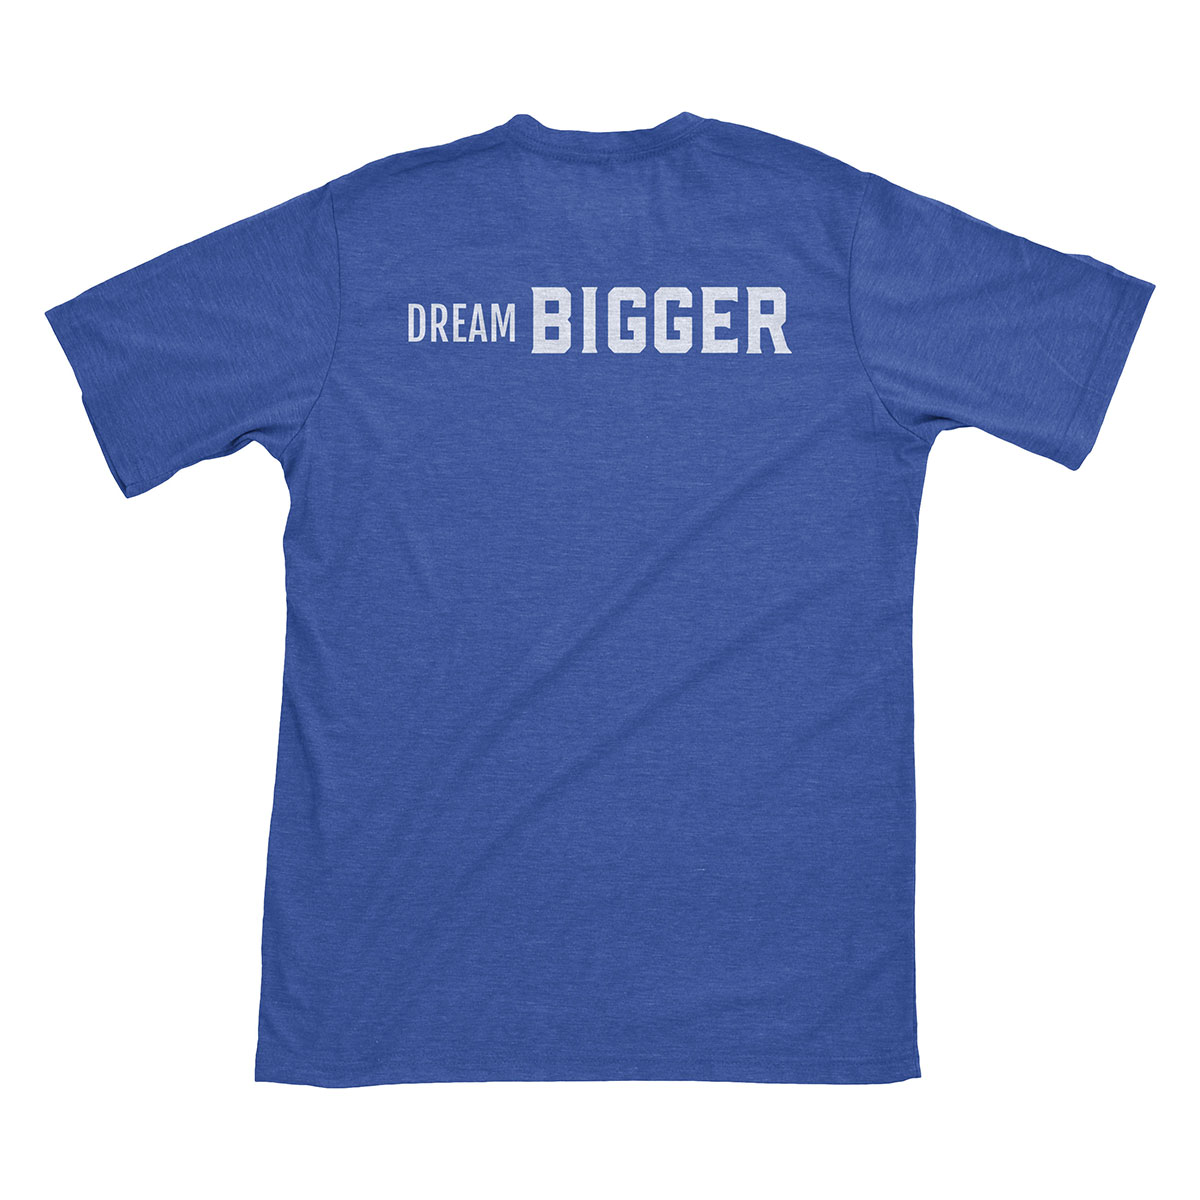 Doubleday Sports Complex T-shirt design